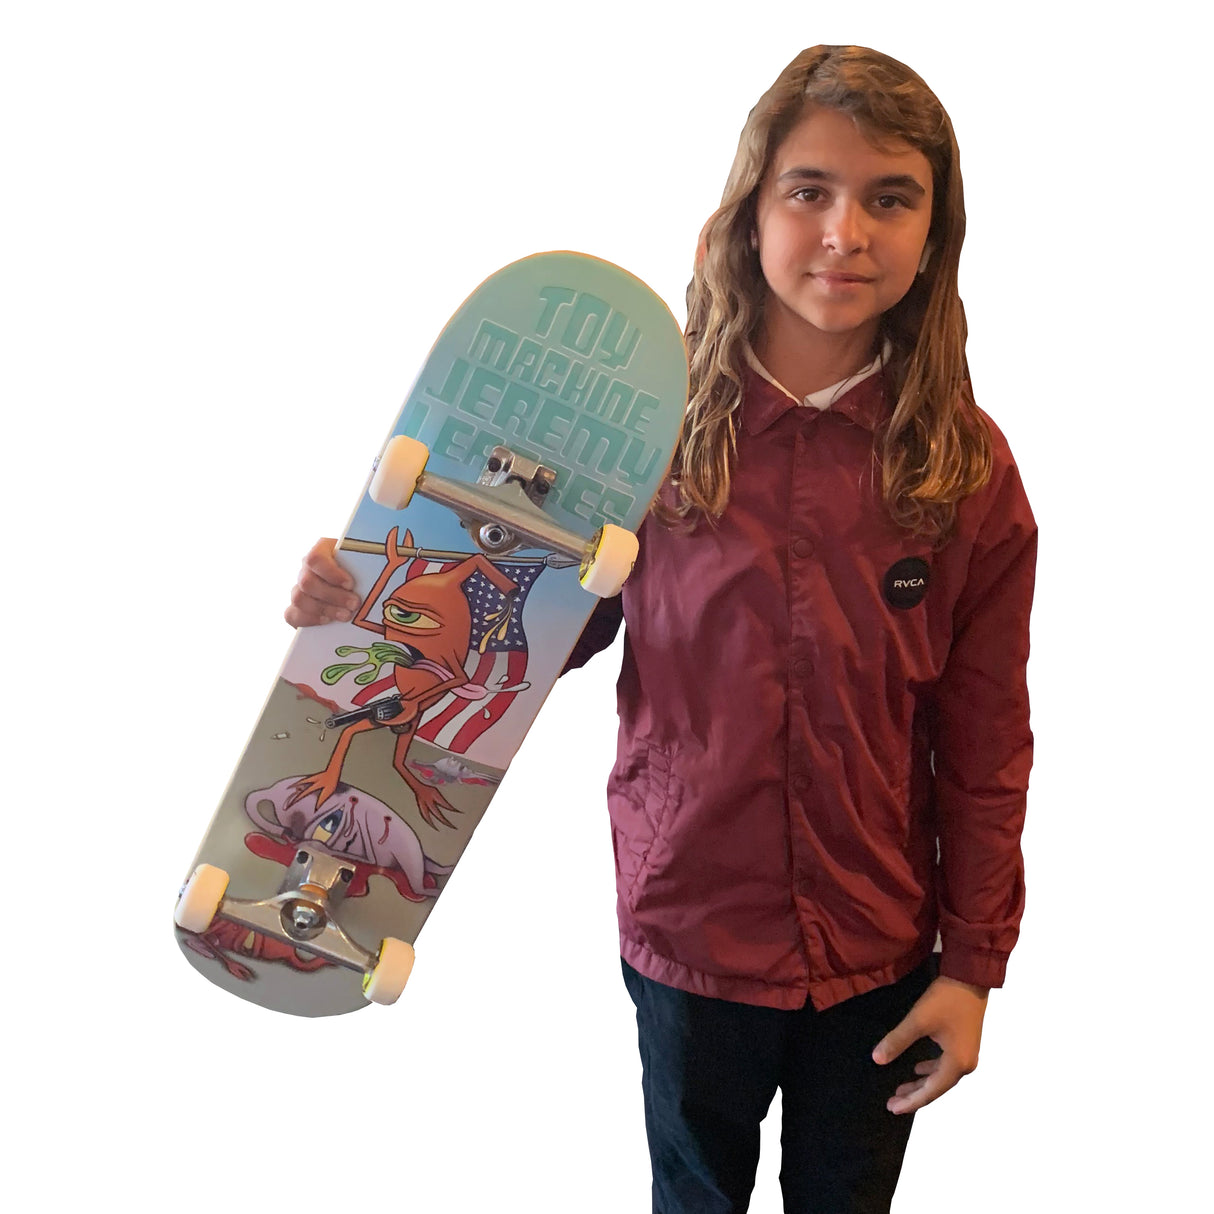 $99 Pro Complete Skateboard